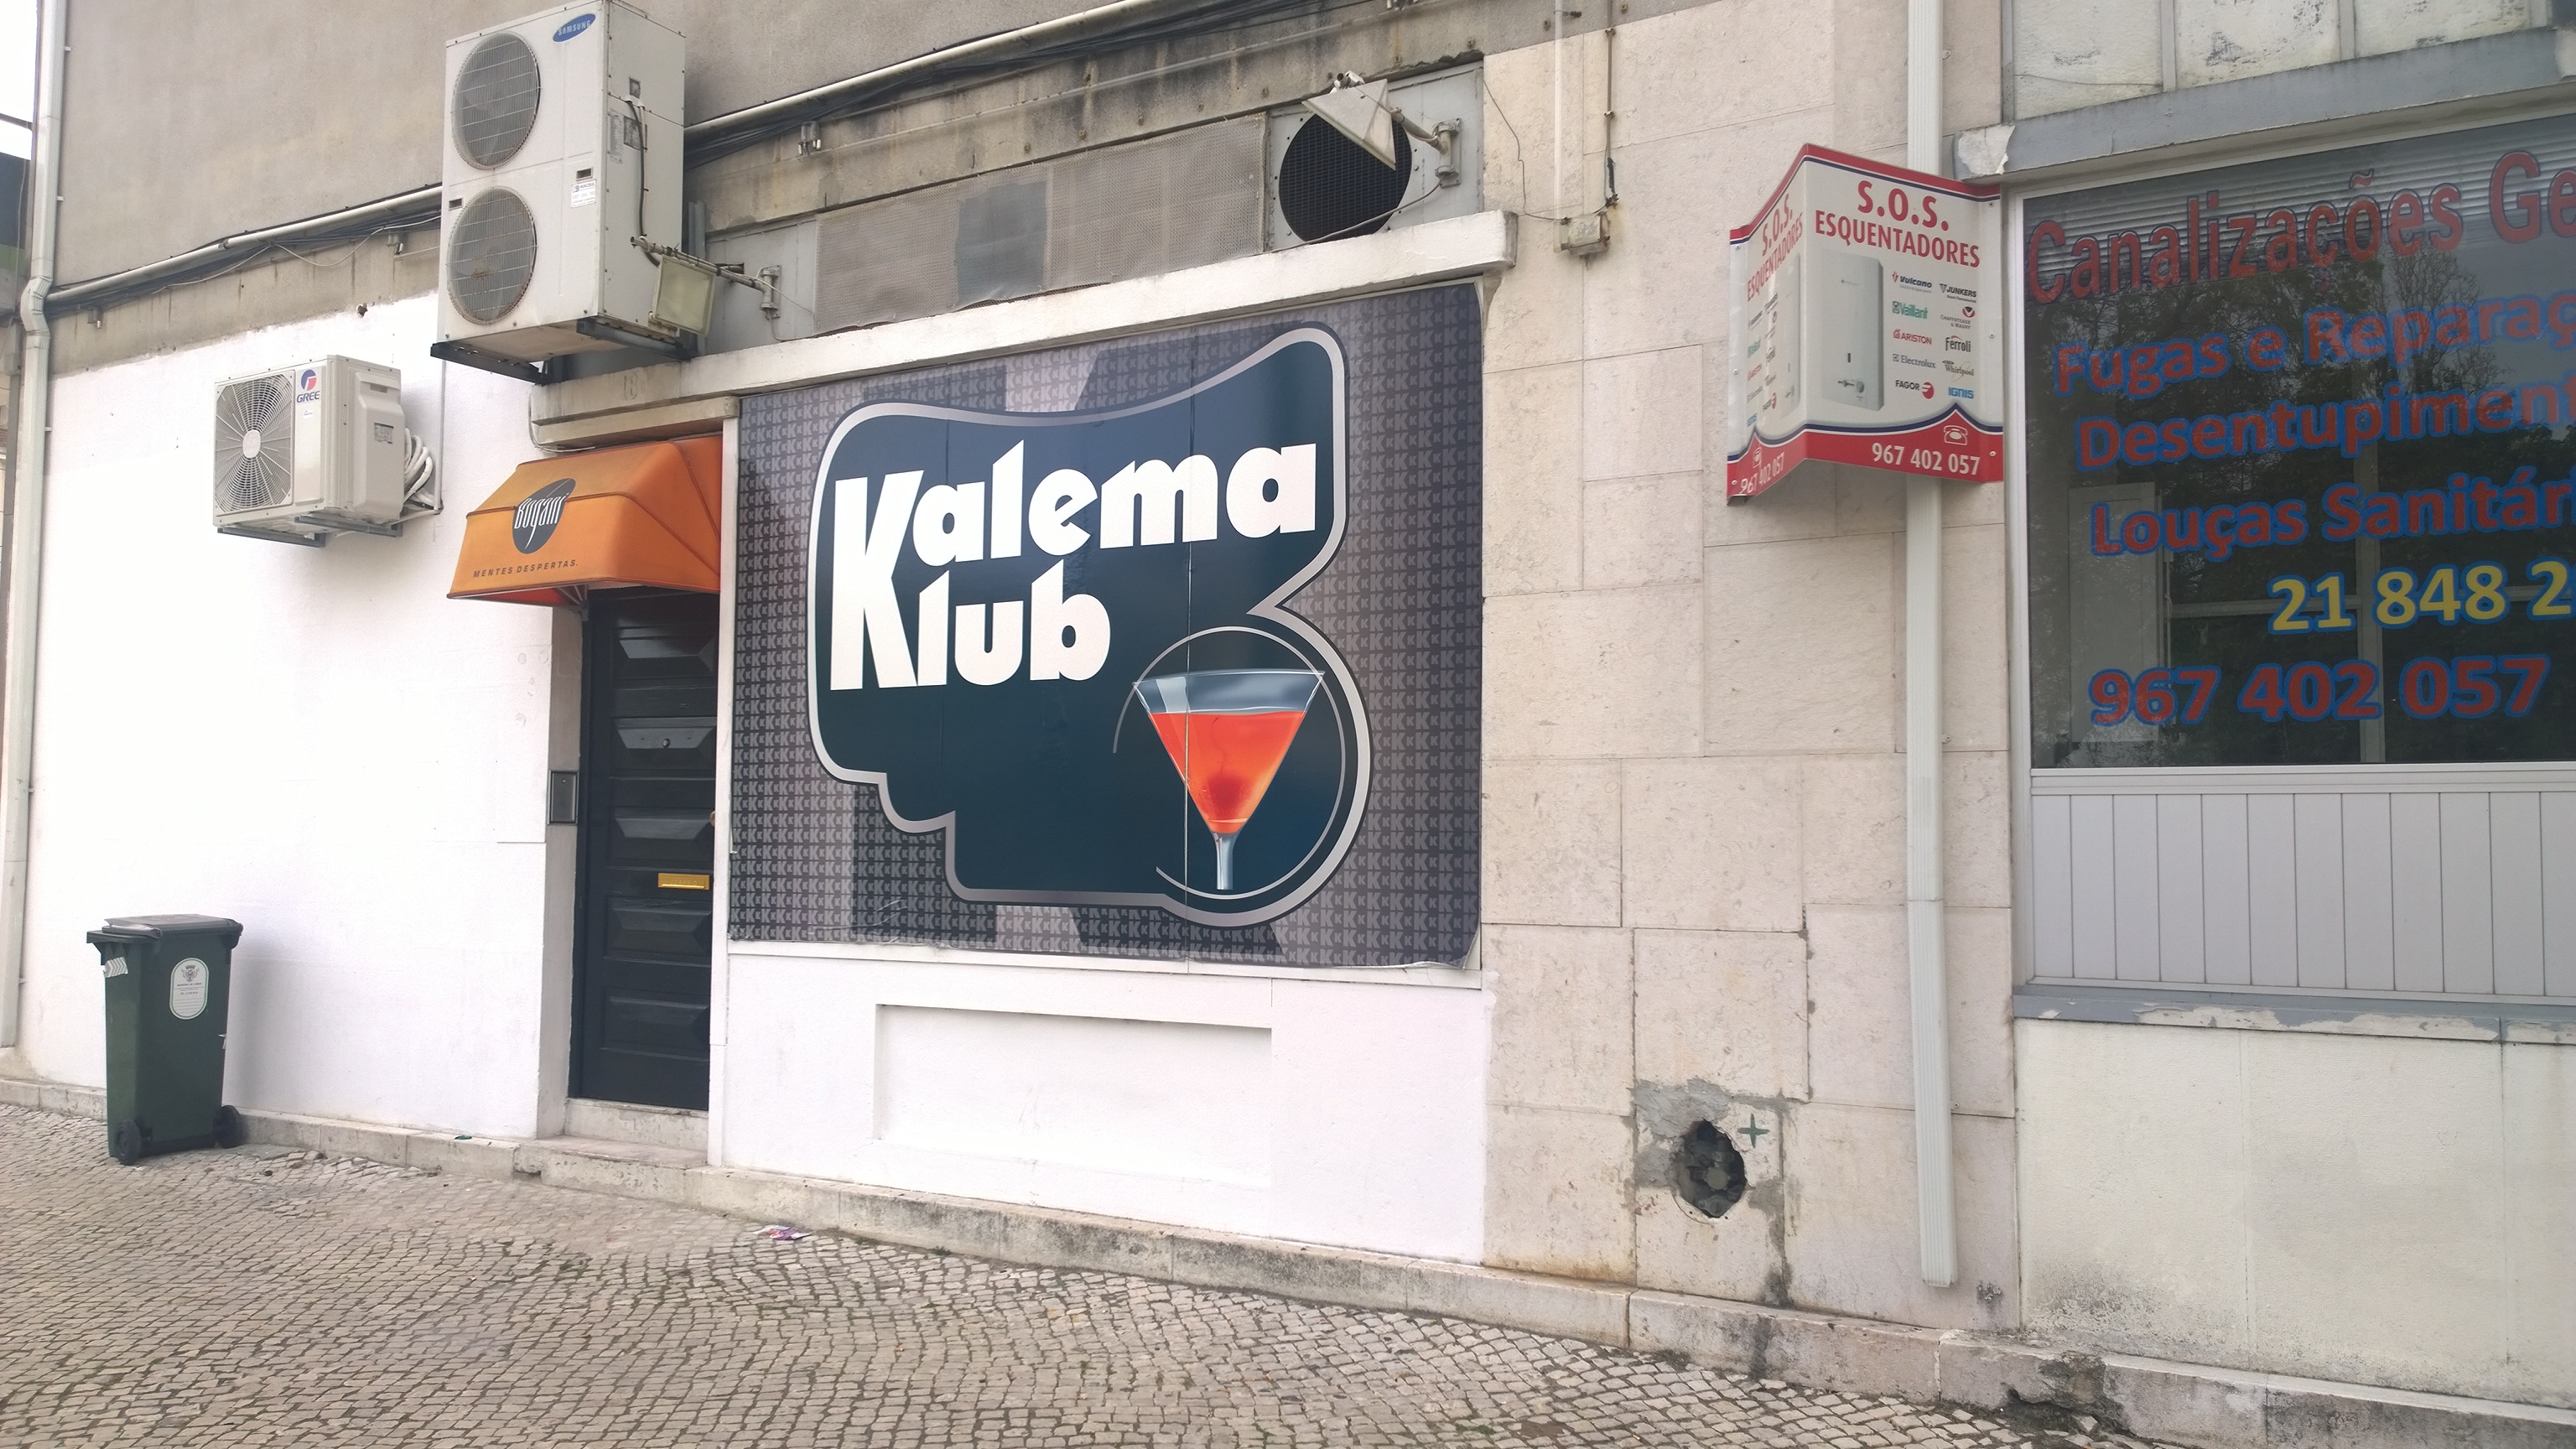 Entrance to Kalema Club